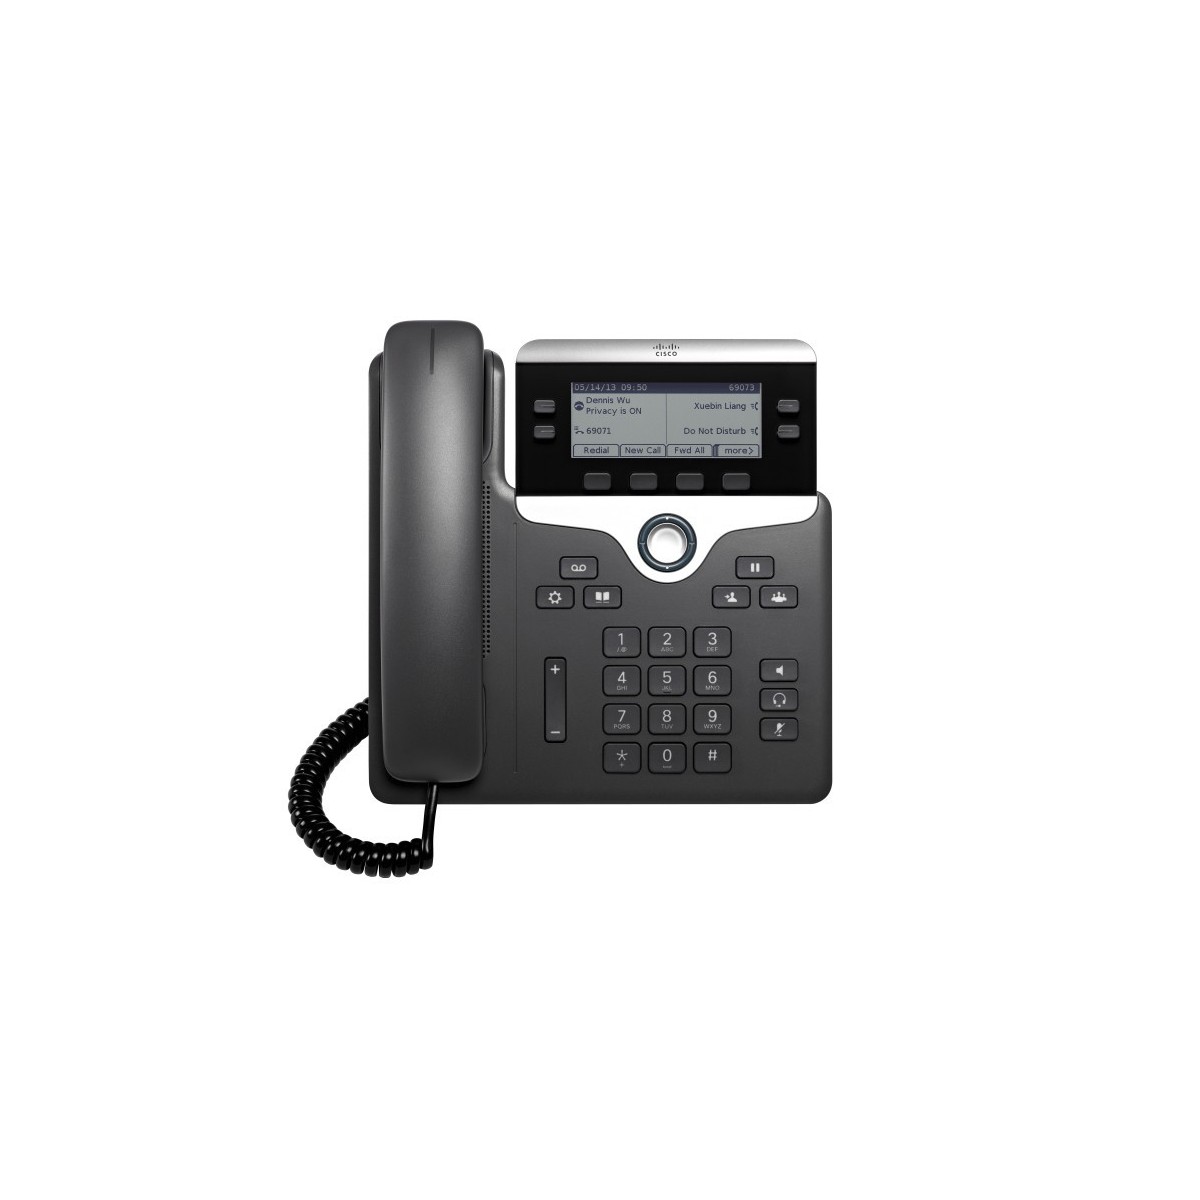 Cisco IP Phone 7821 - VoIP-Telefon - SIP, SRTP